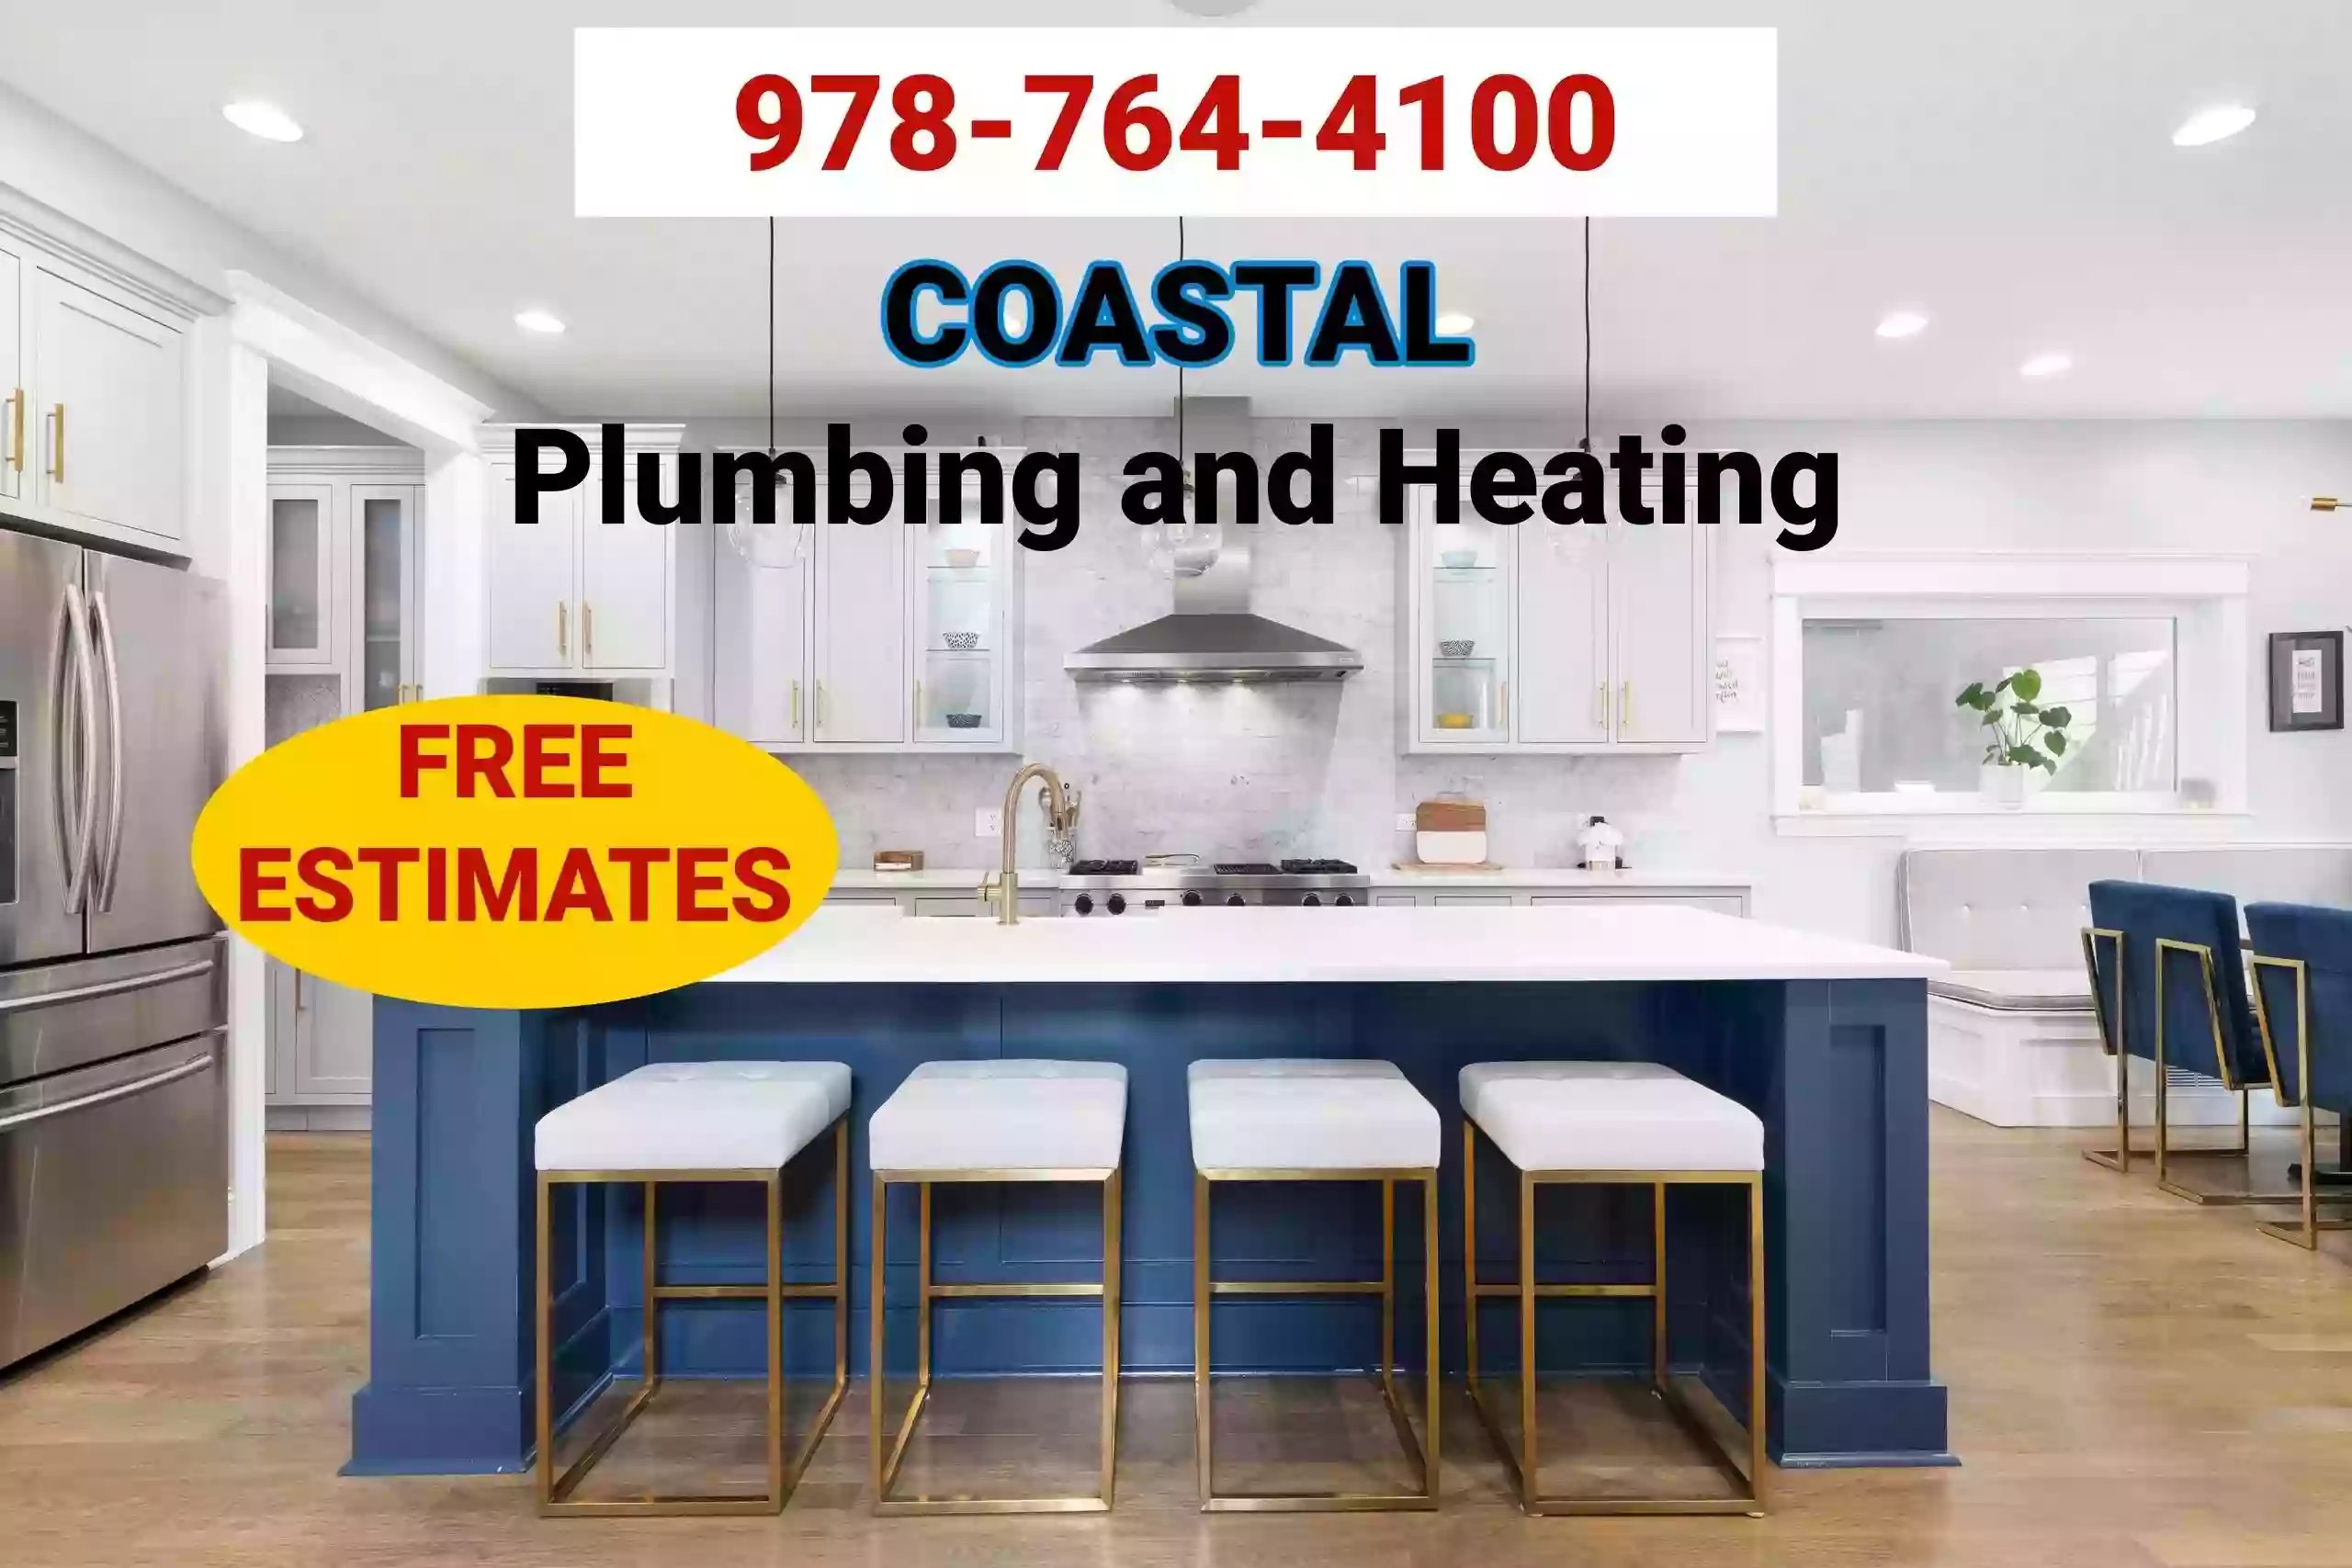 Coastal Plumbing and Heating